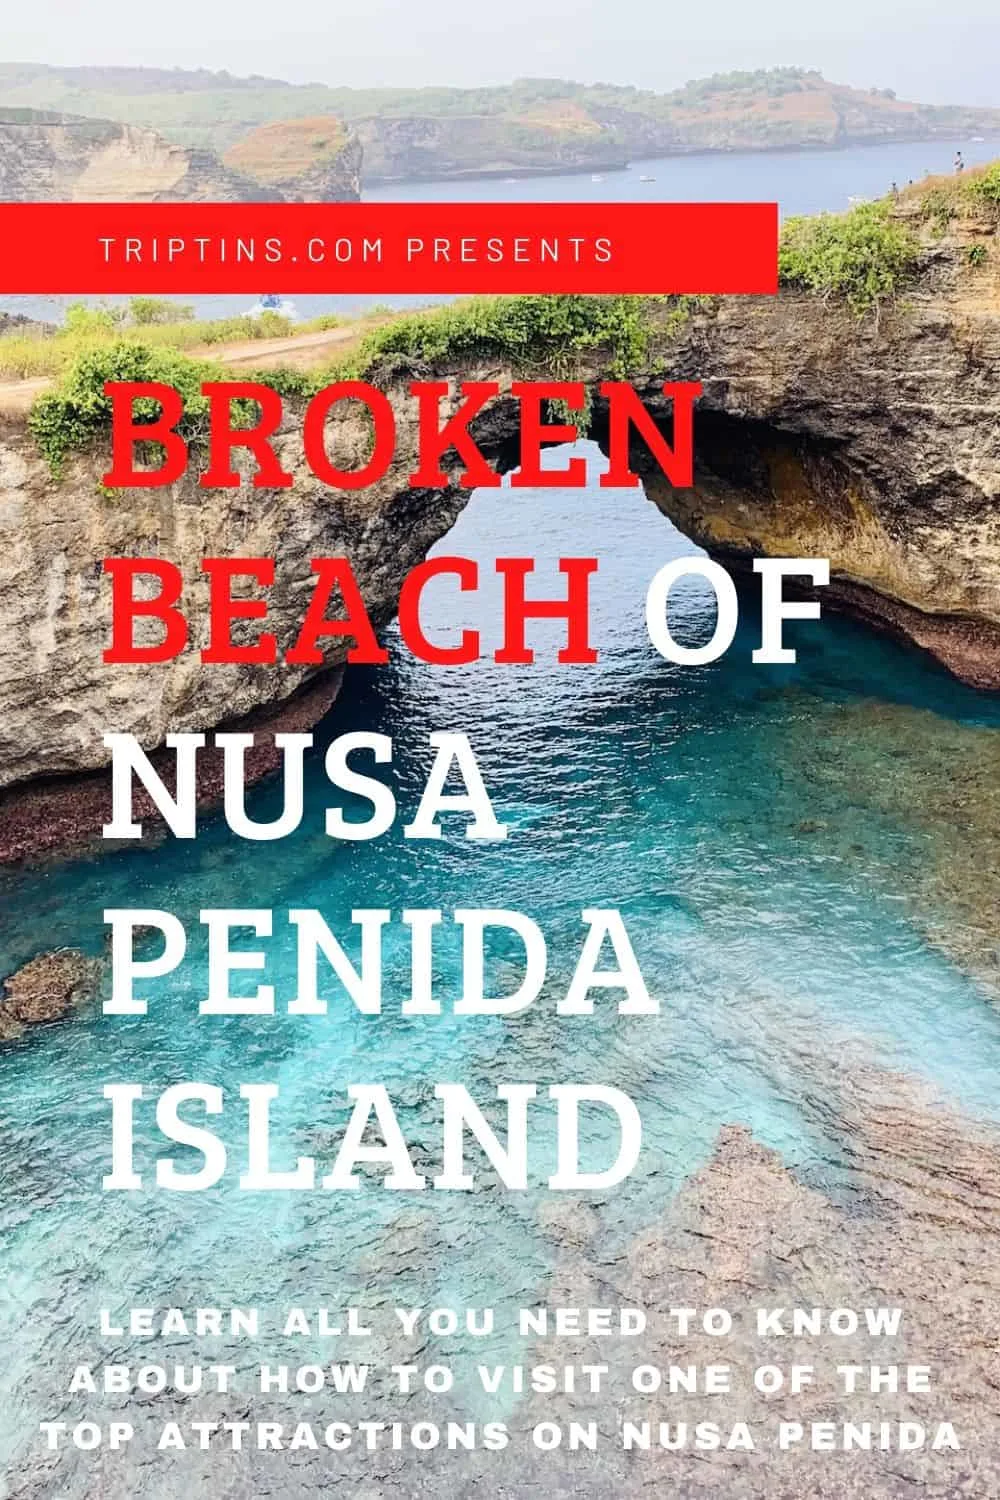 Broken Beach Nusa Penida Indonesia